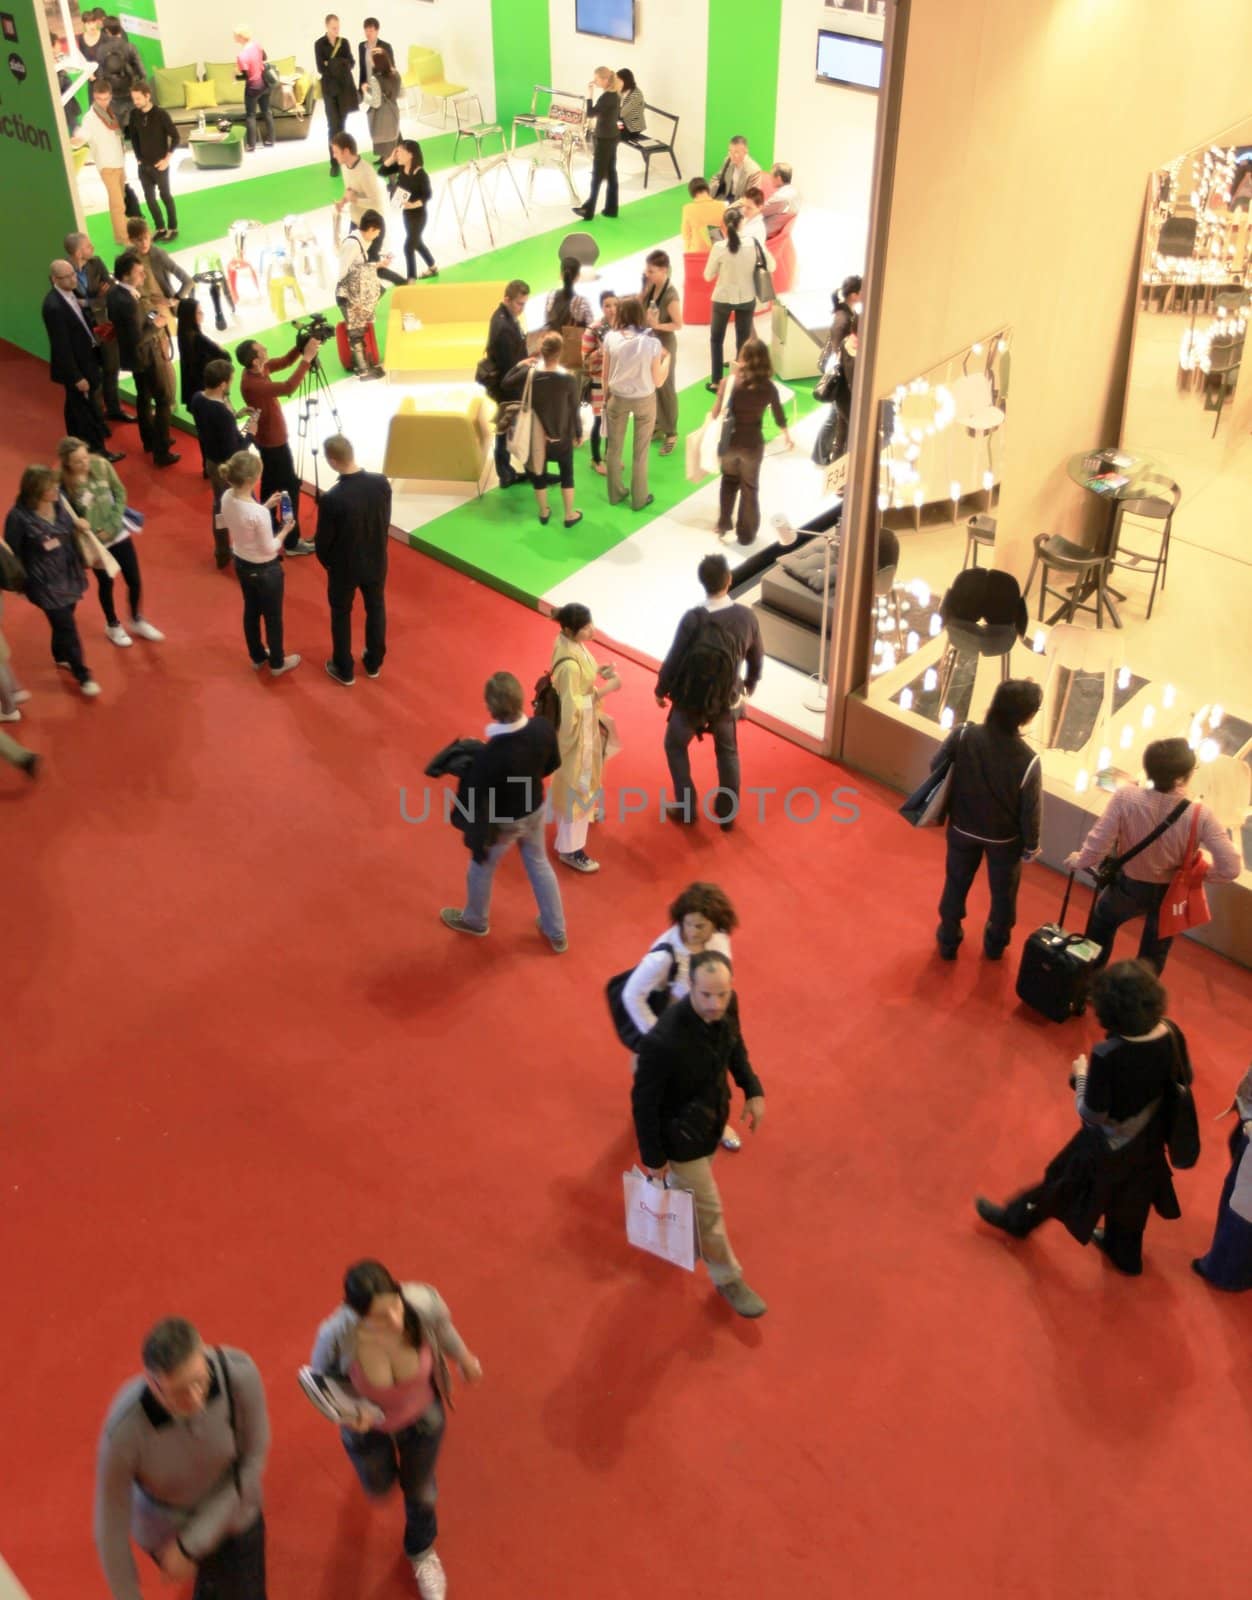 Salone del Mobile 2011, international furnishing accessories tradeshow by adrianocastelli